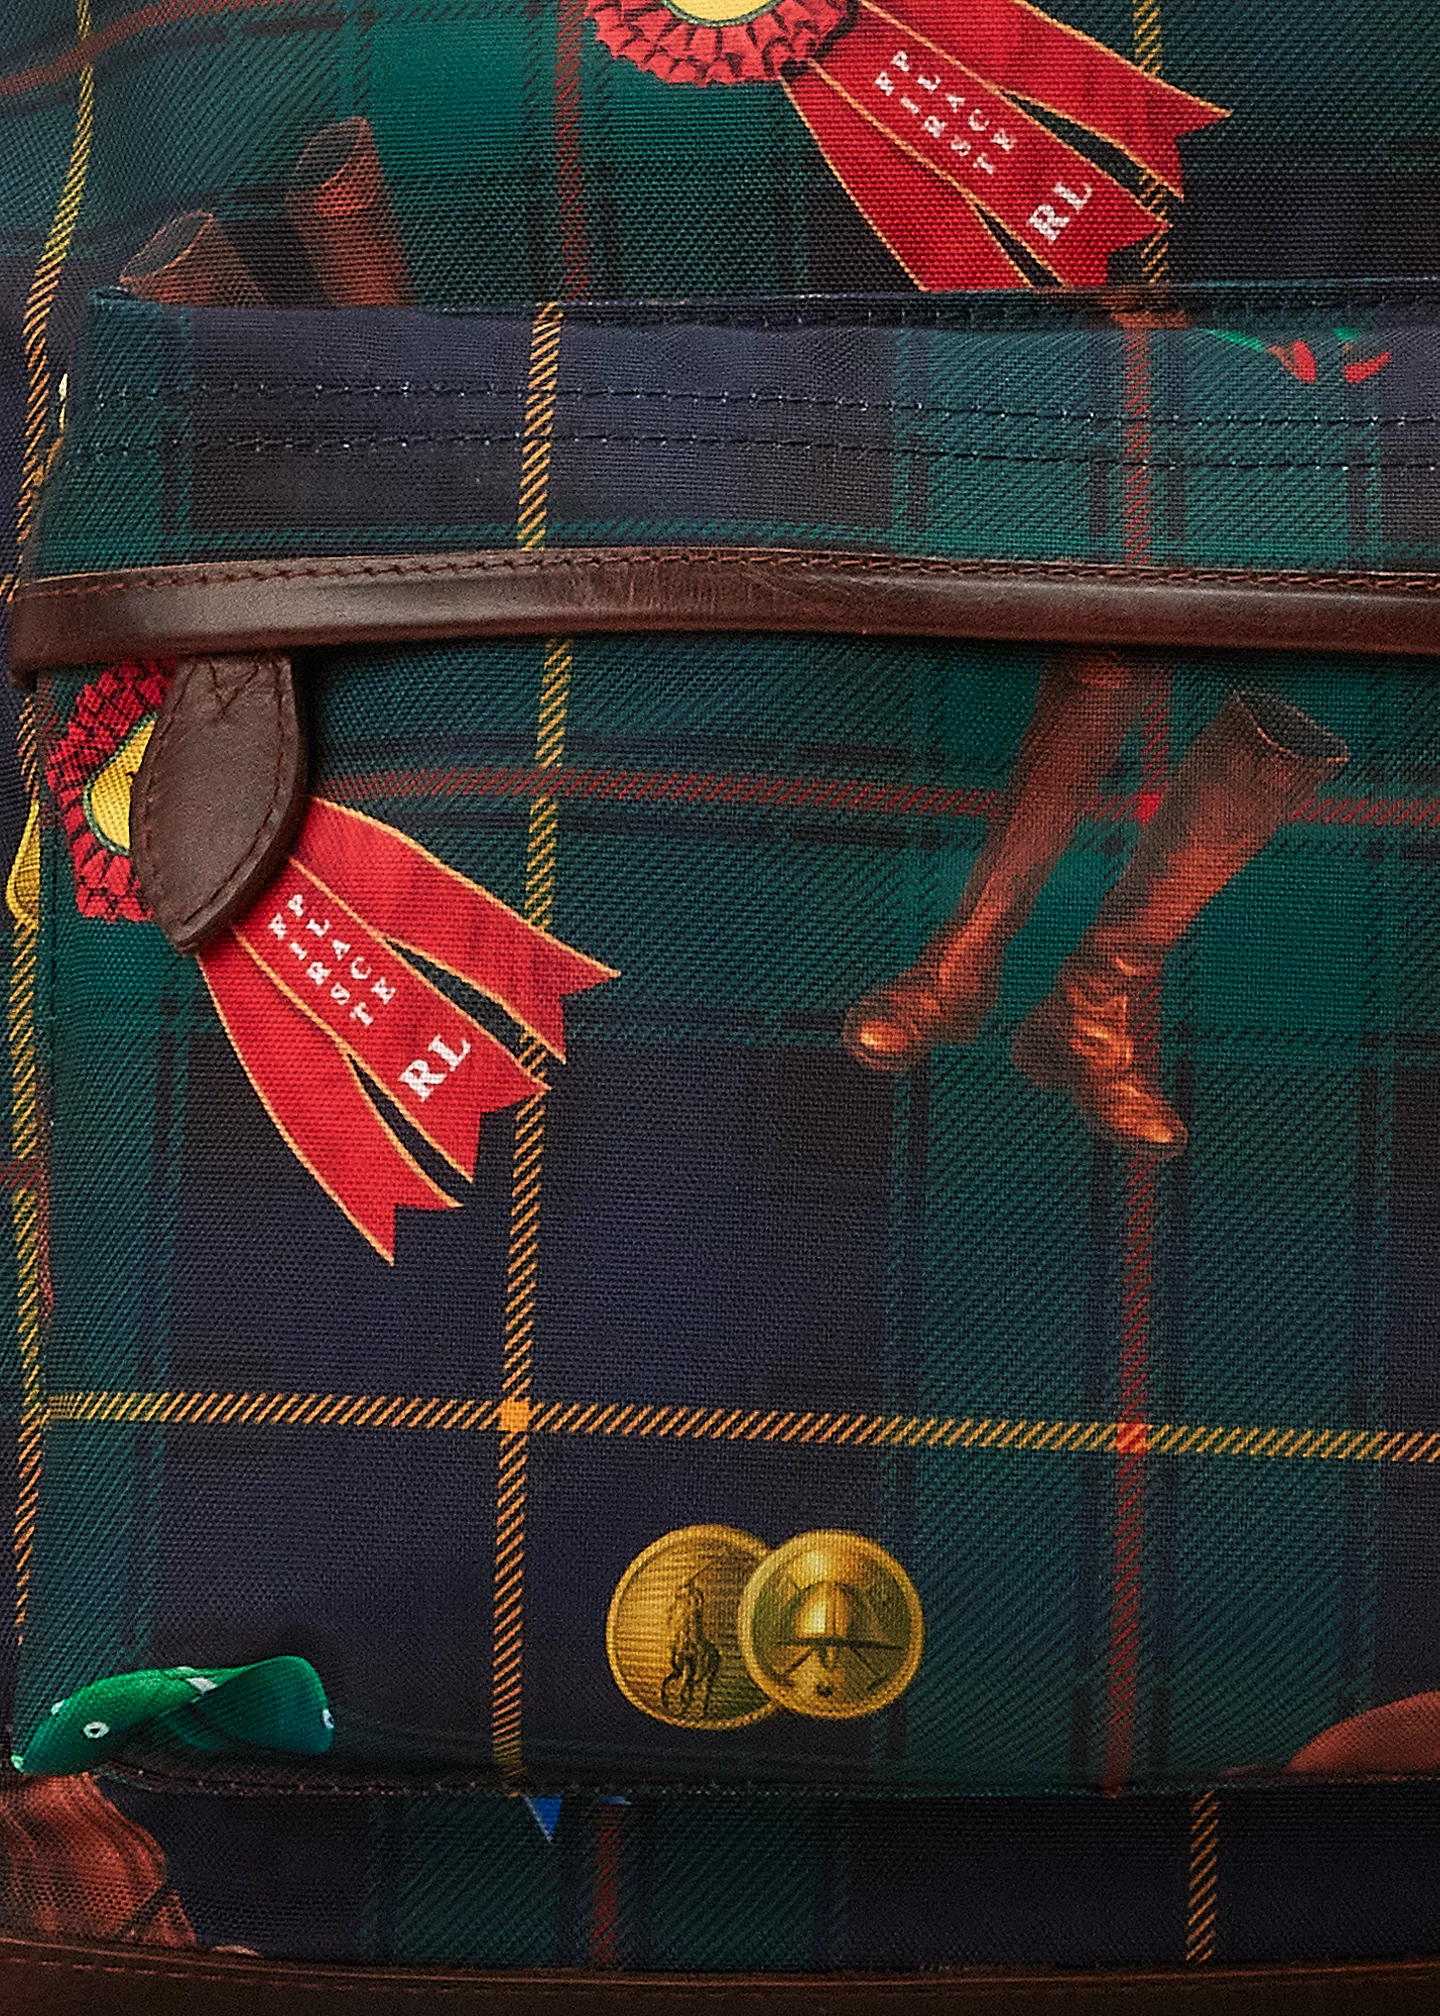 stylish handbagsEquestrian-Plaid Canvas Backpack-,$18.69-3